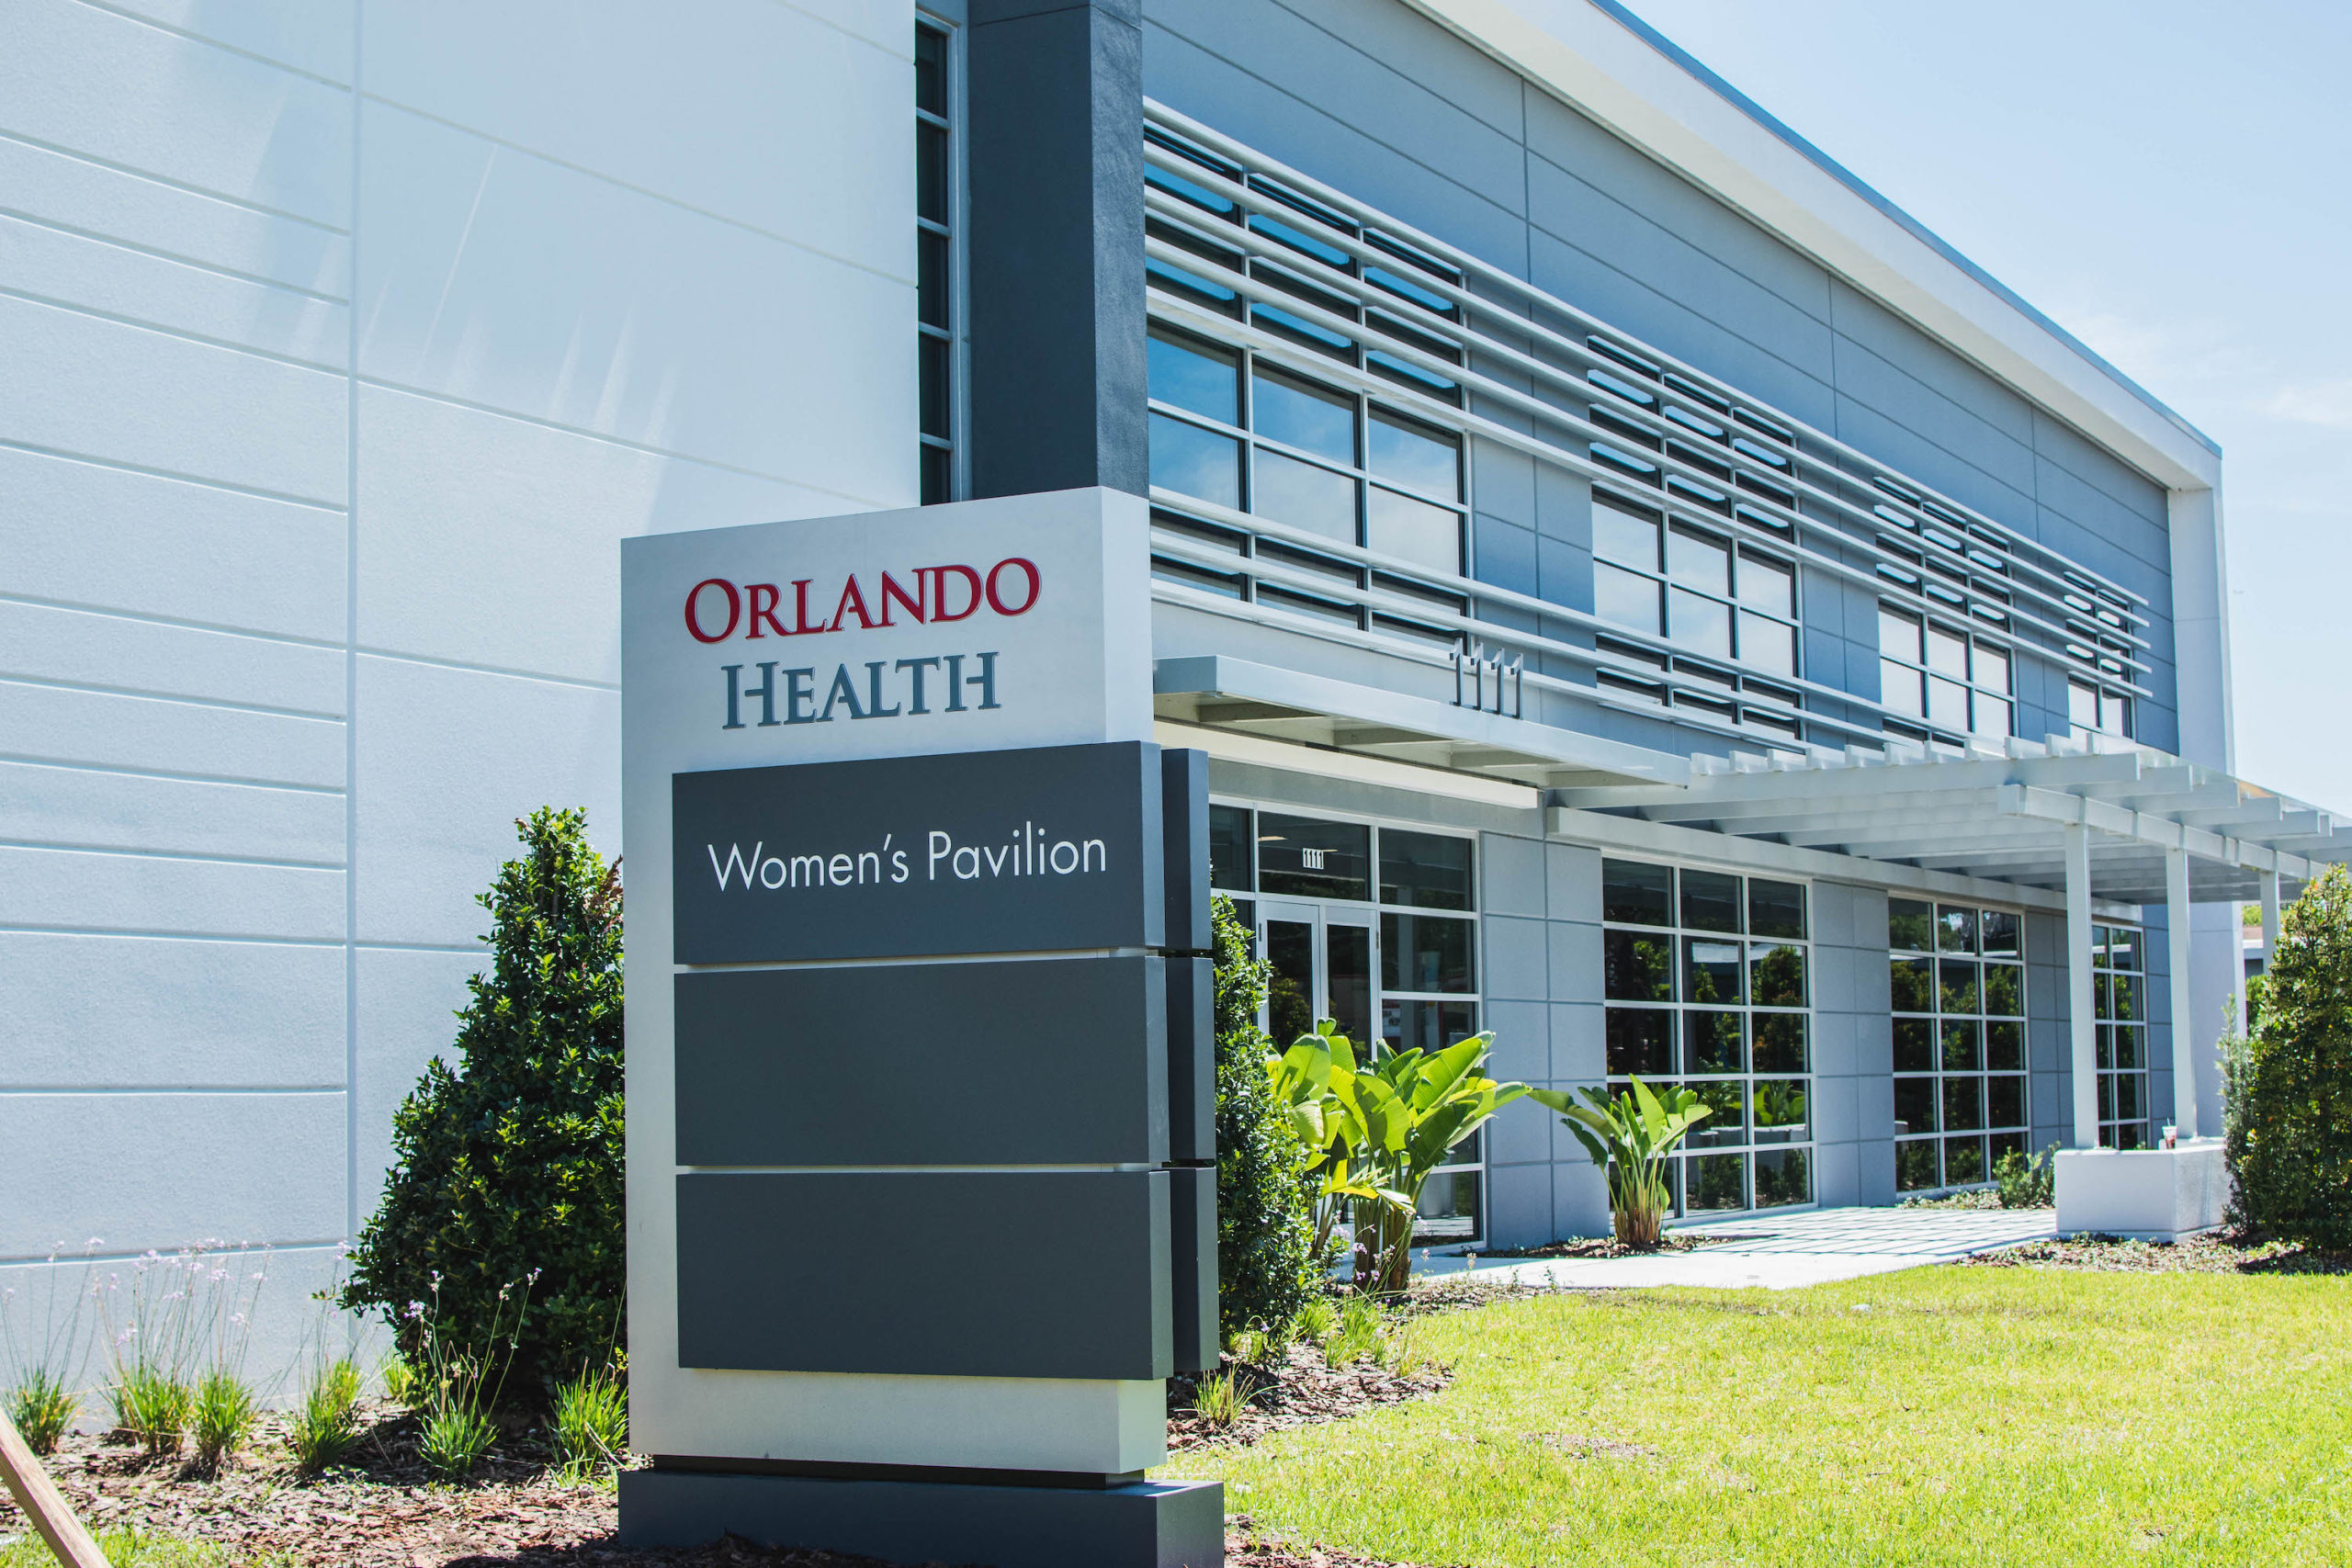 The Orlando Health Women's Pavilion in Winter Park, Fla.